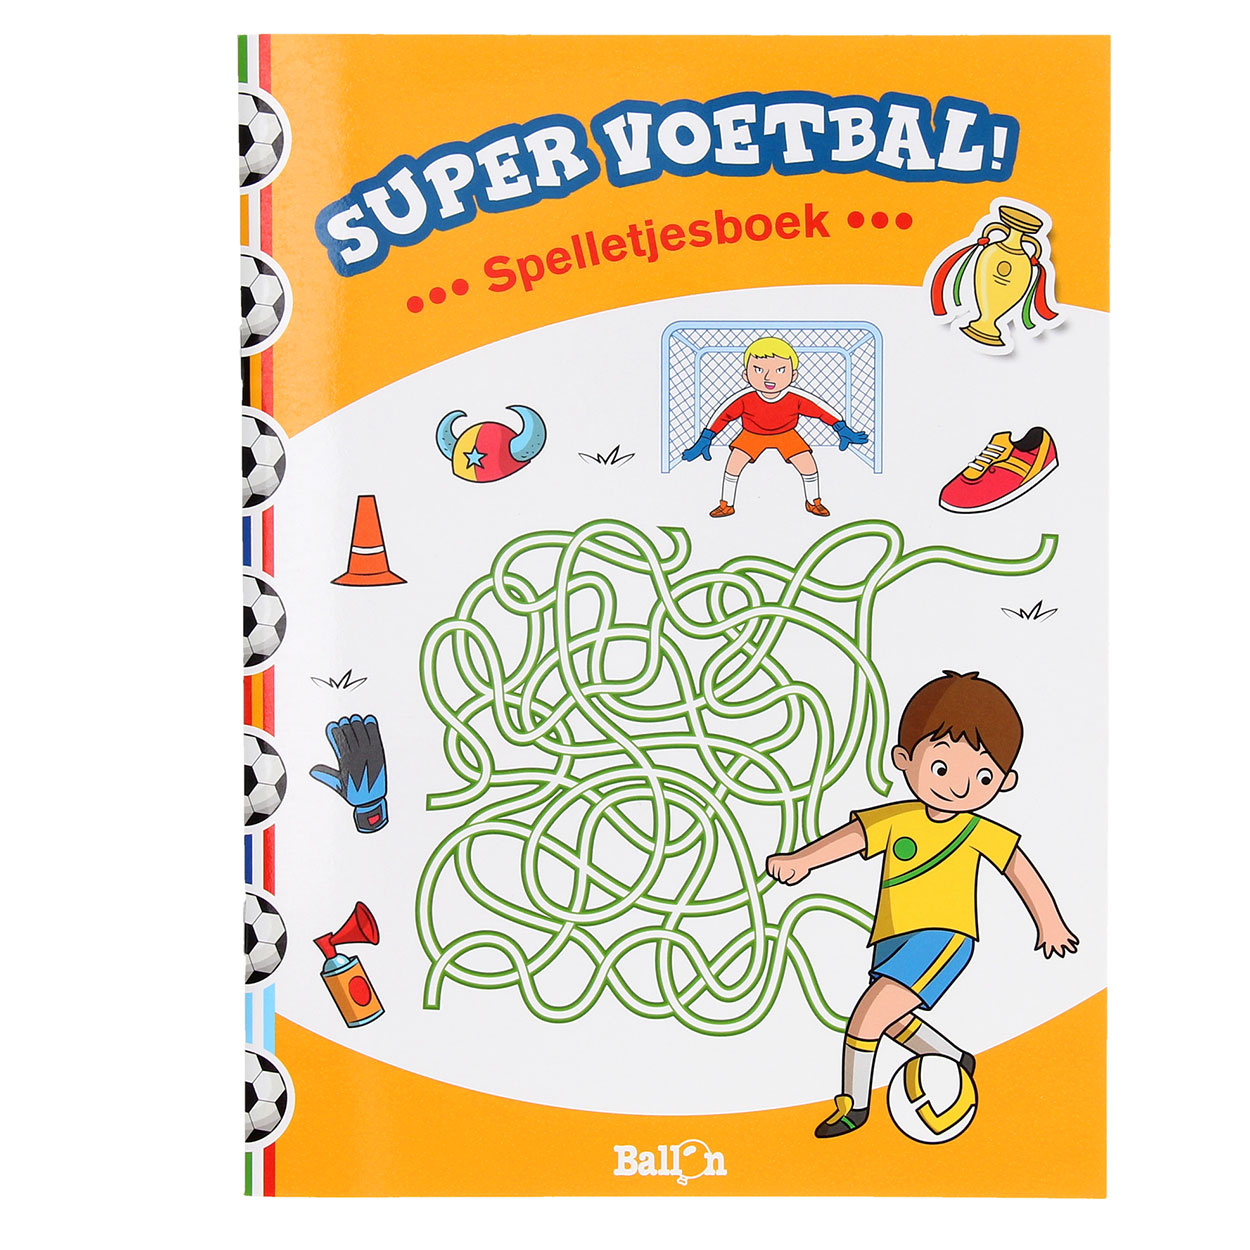 Spelletjesboek Super Voetbal